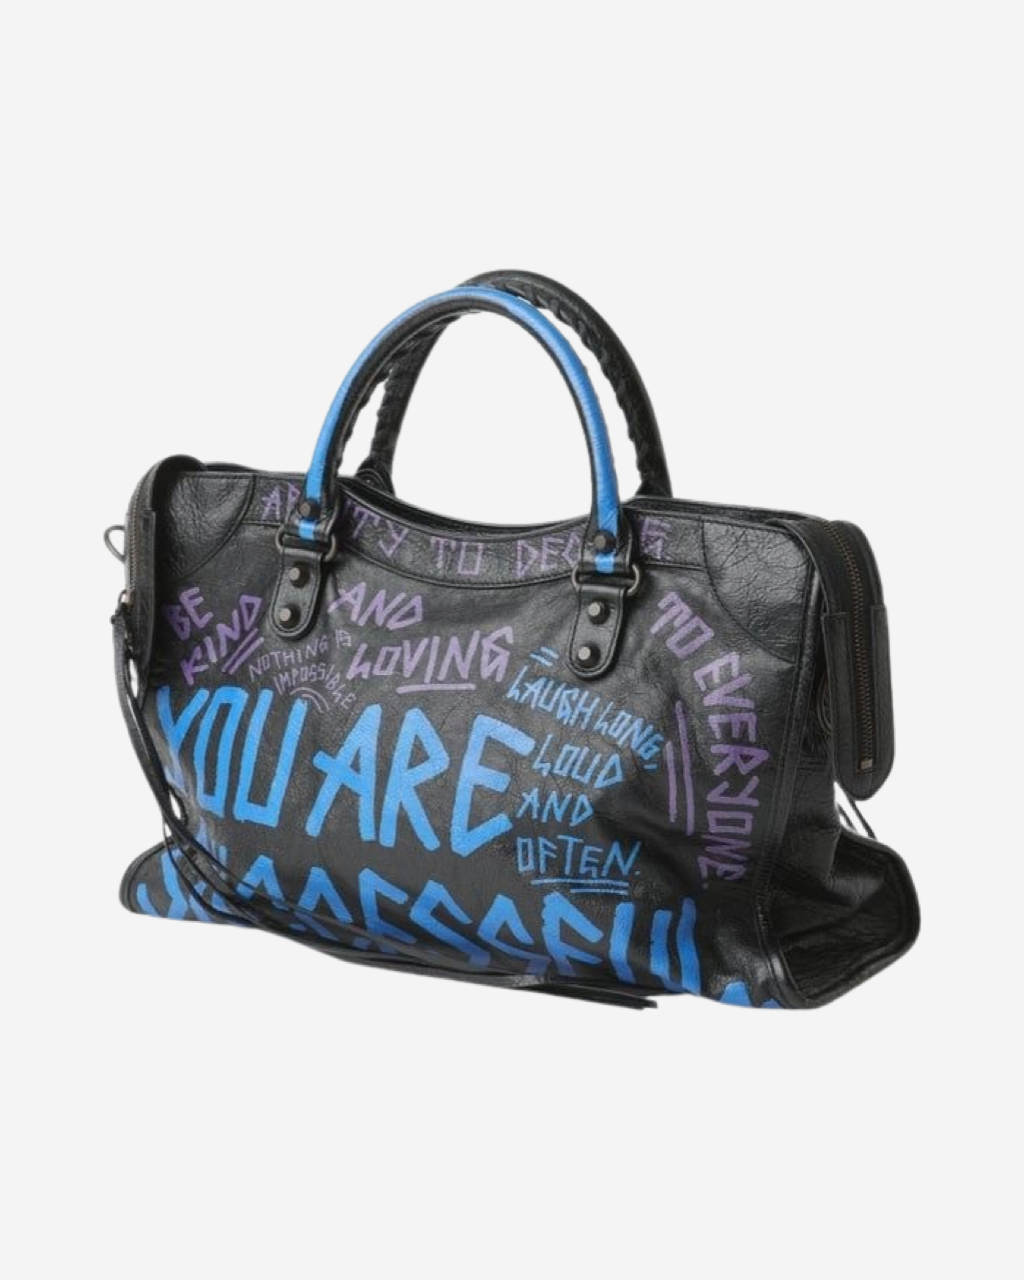 Balenciaga Graffiti Bag